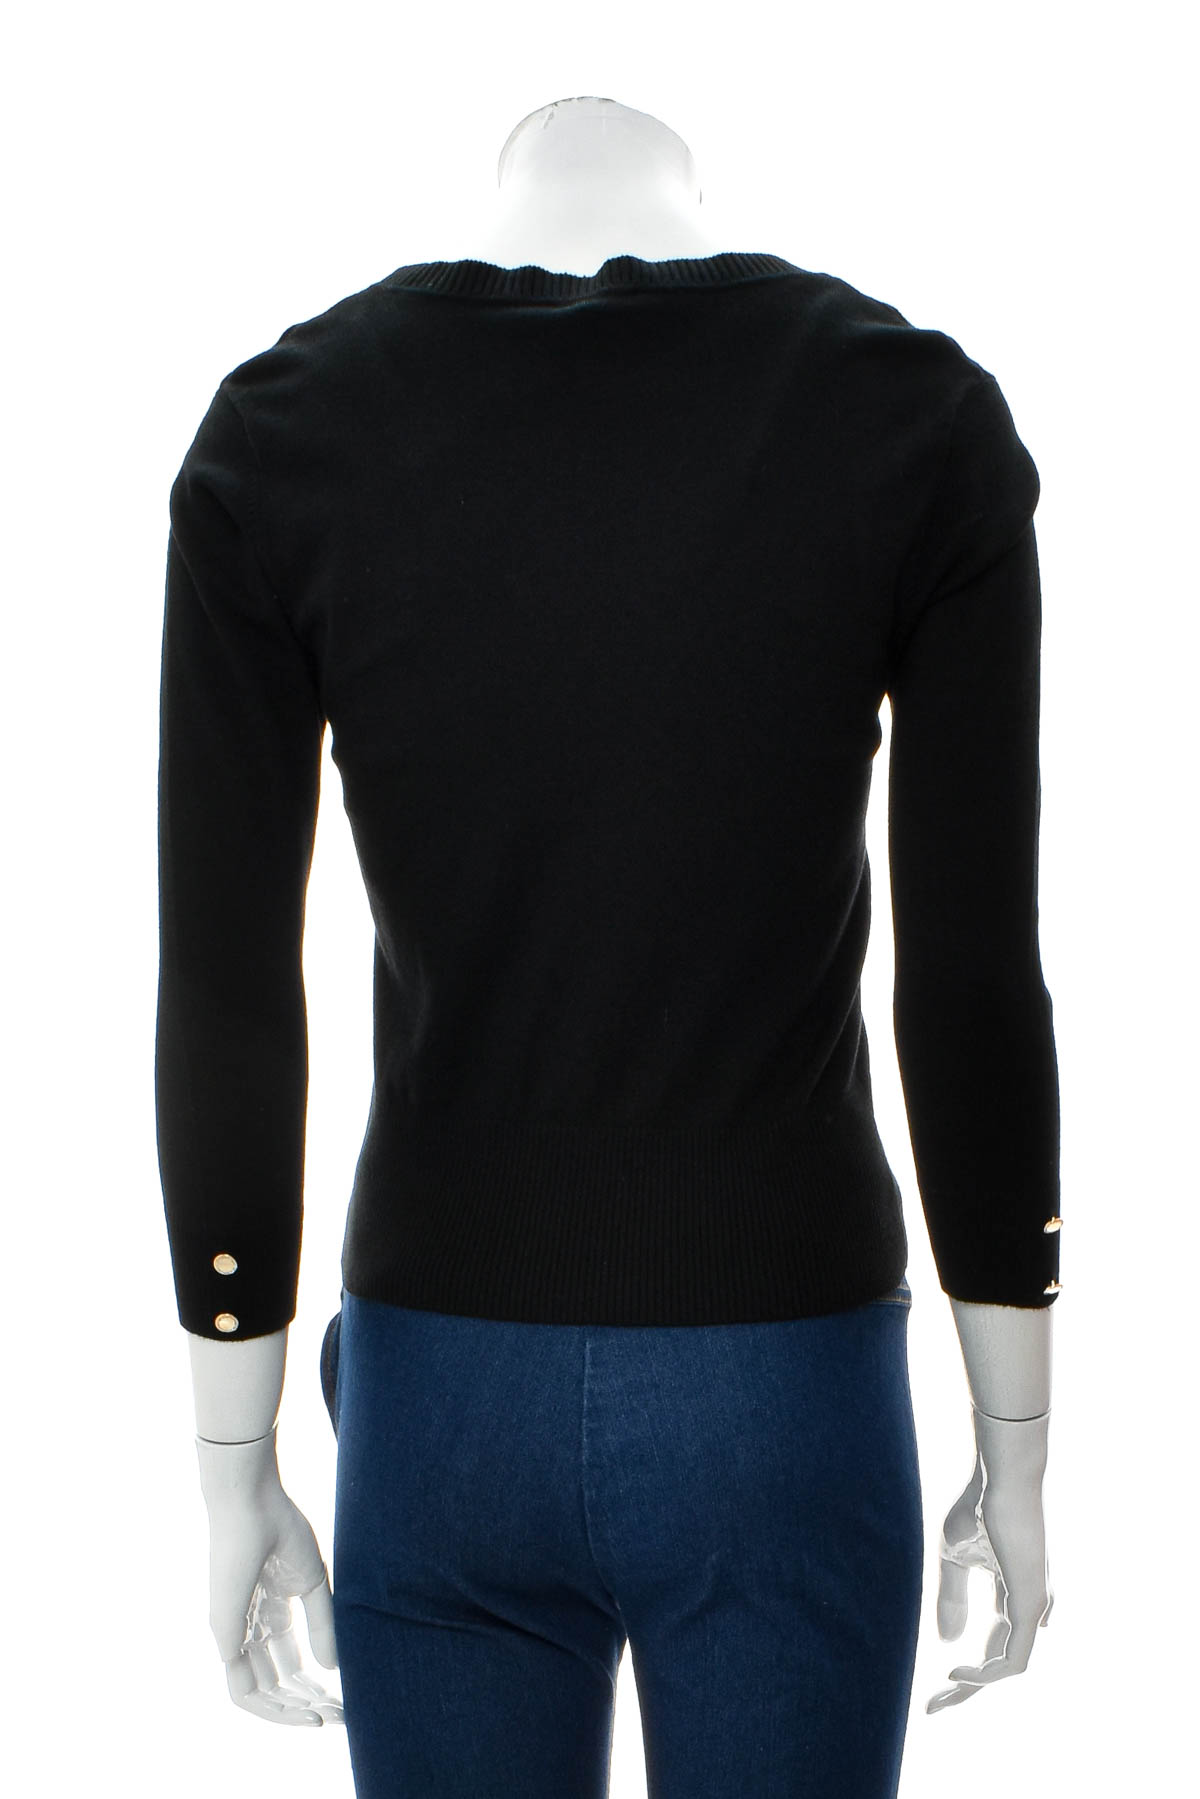 Women's sweater - Morgan - 1